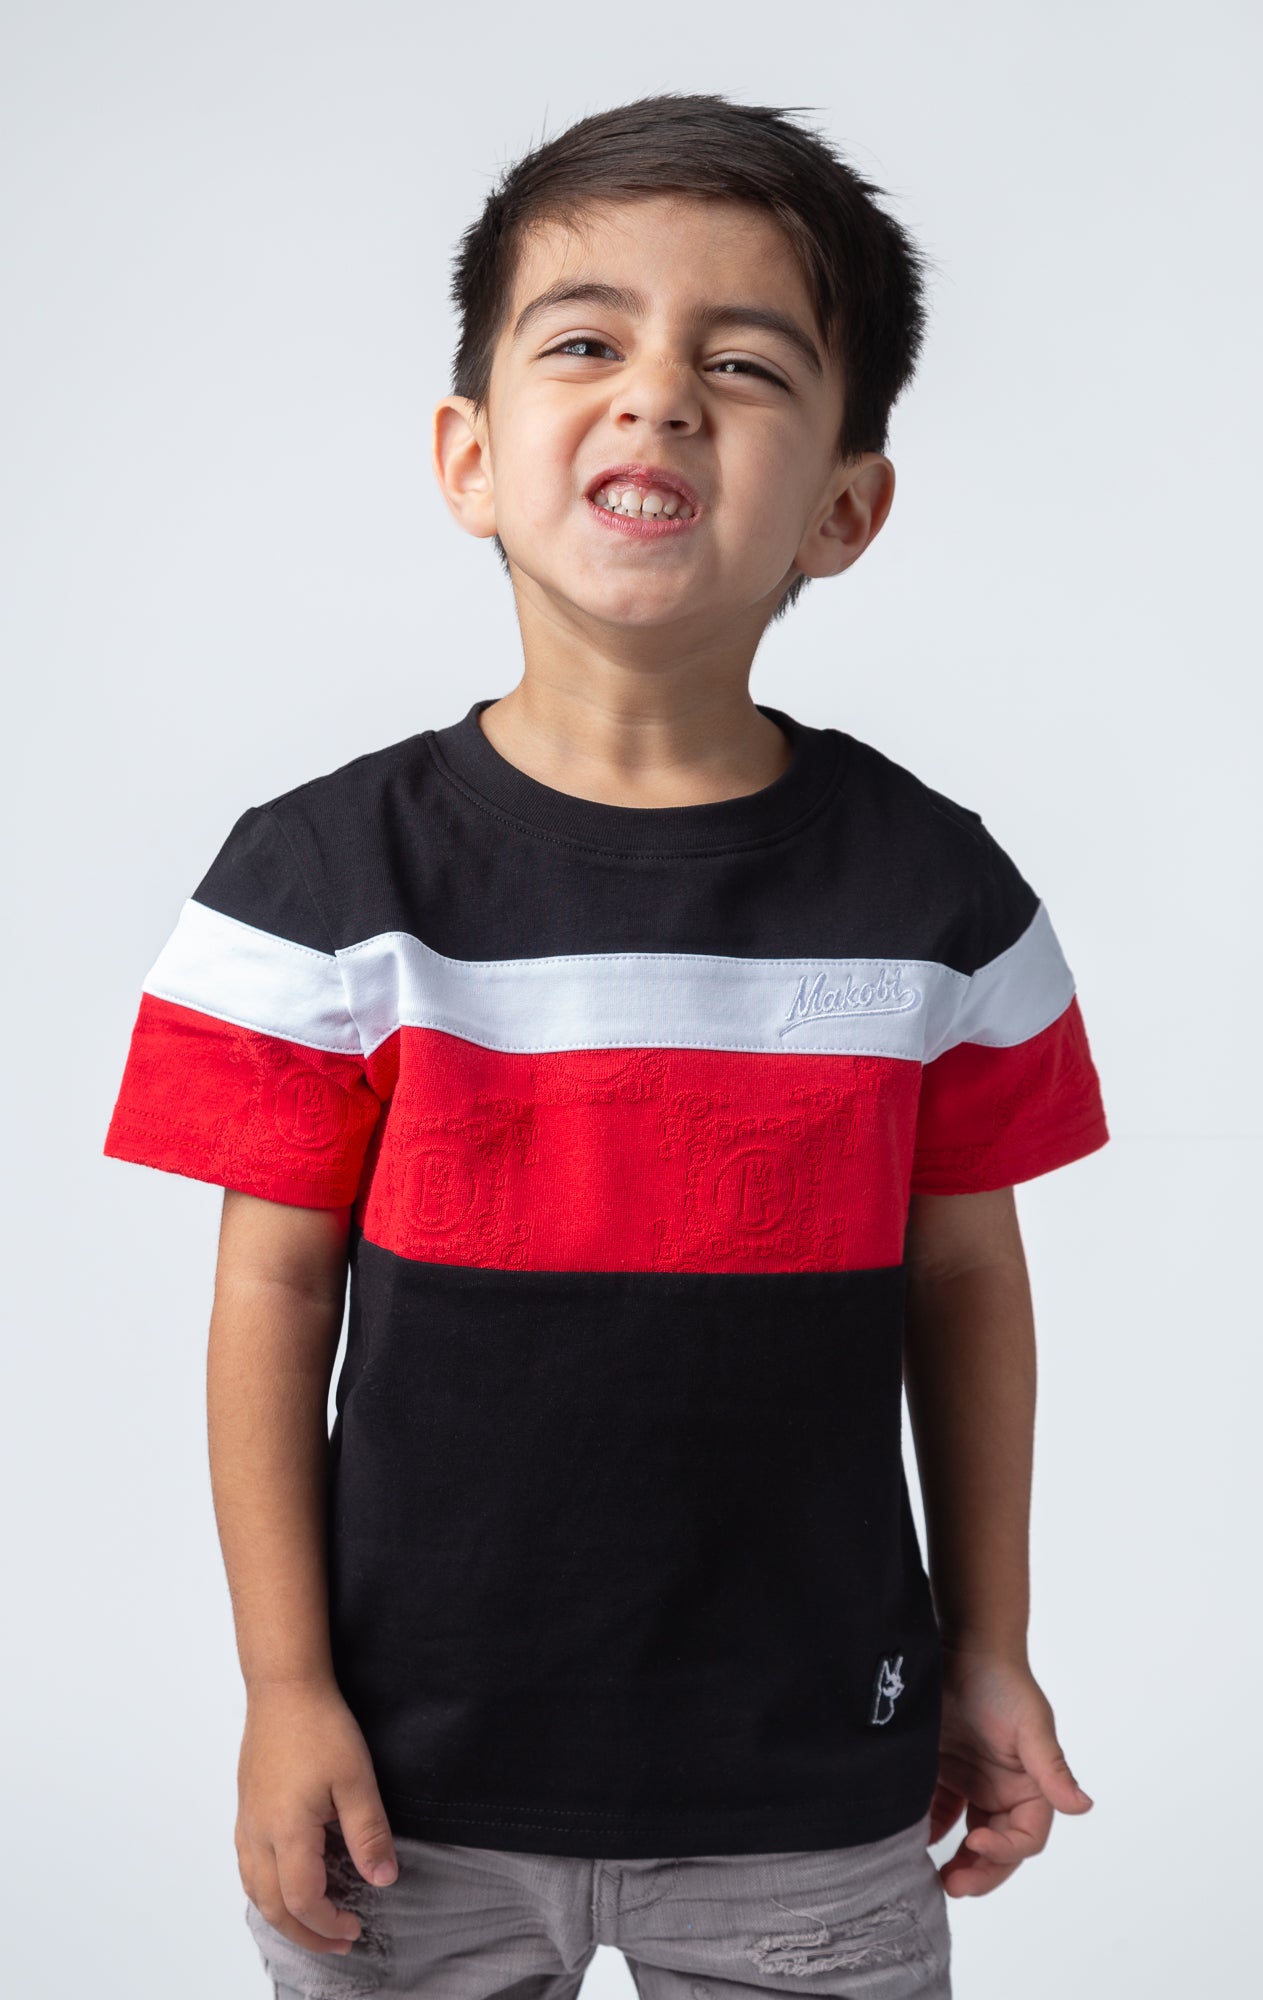 Monogram kid's t-shirt made from soft fabric